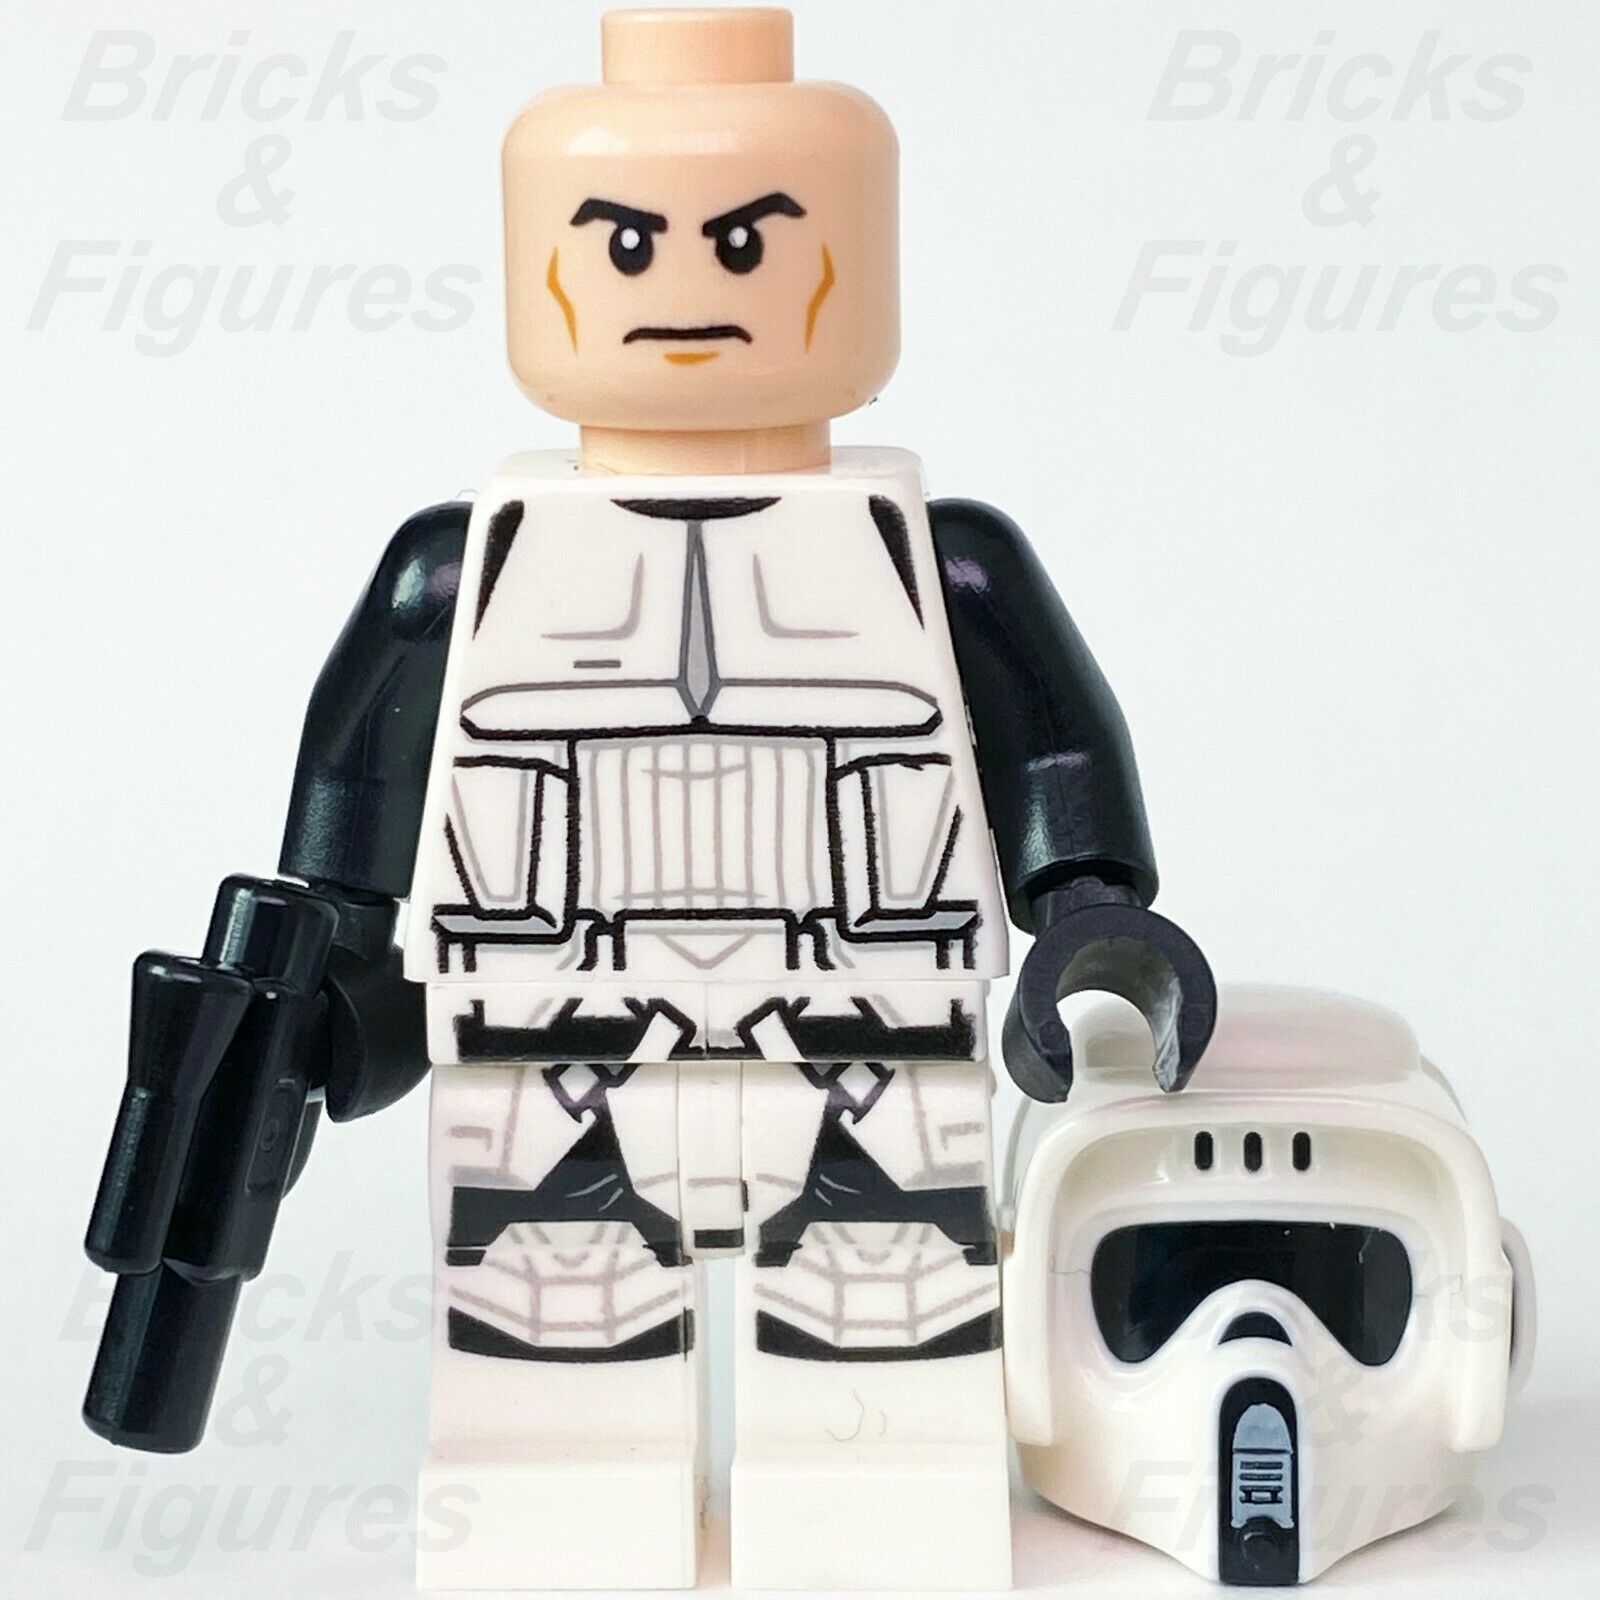 New Star Wars LEGO Scout Trooper Imperial The Mandalorian Minifigure 75292 - Bricks & Figures